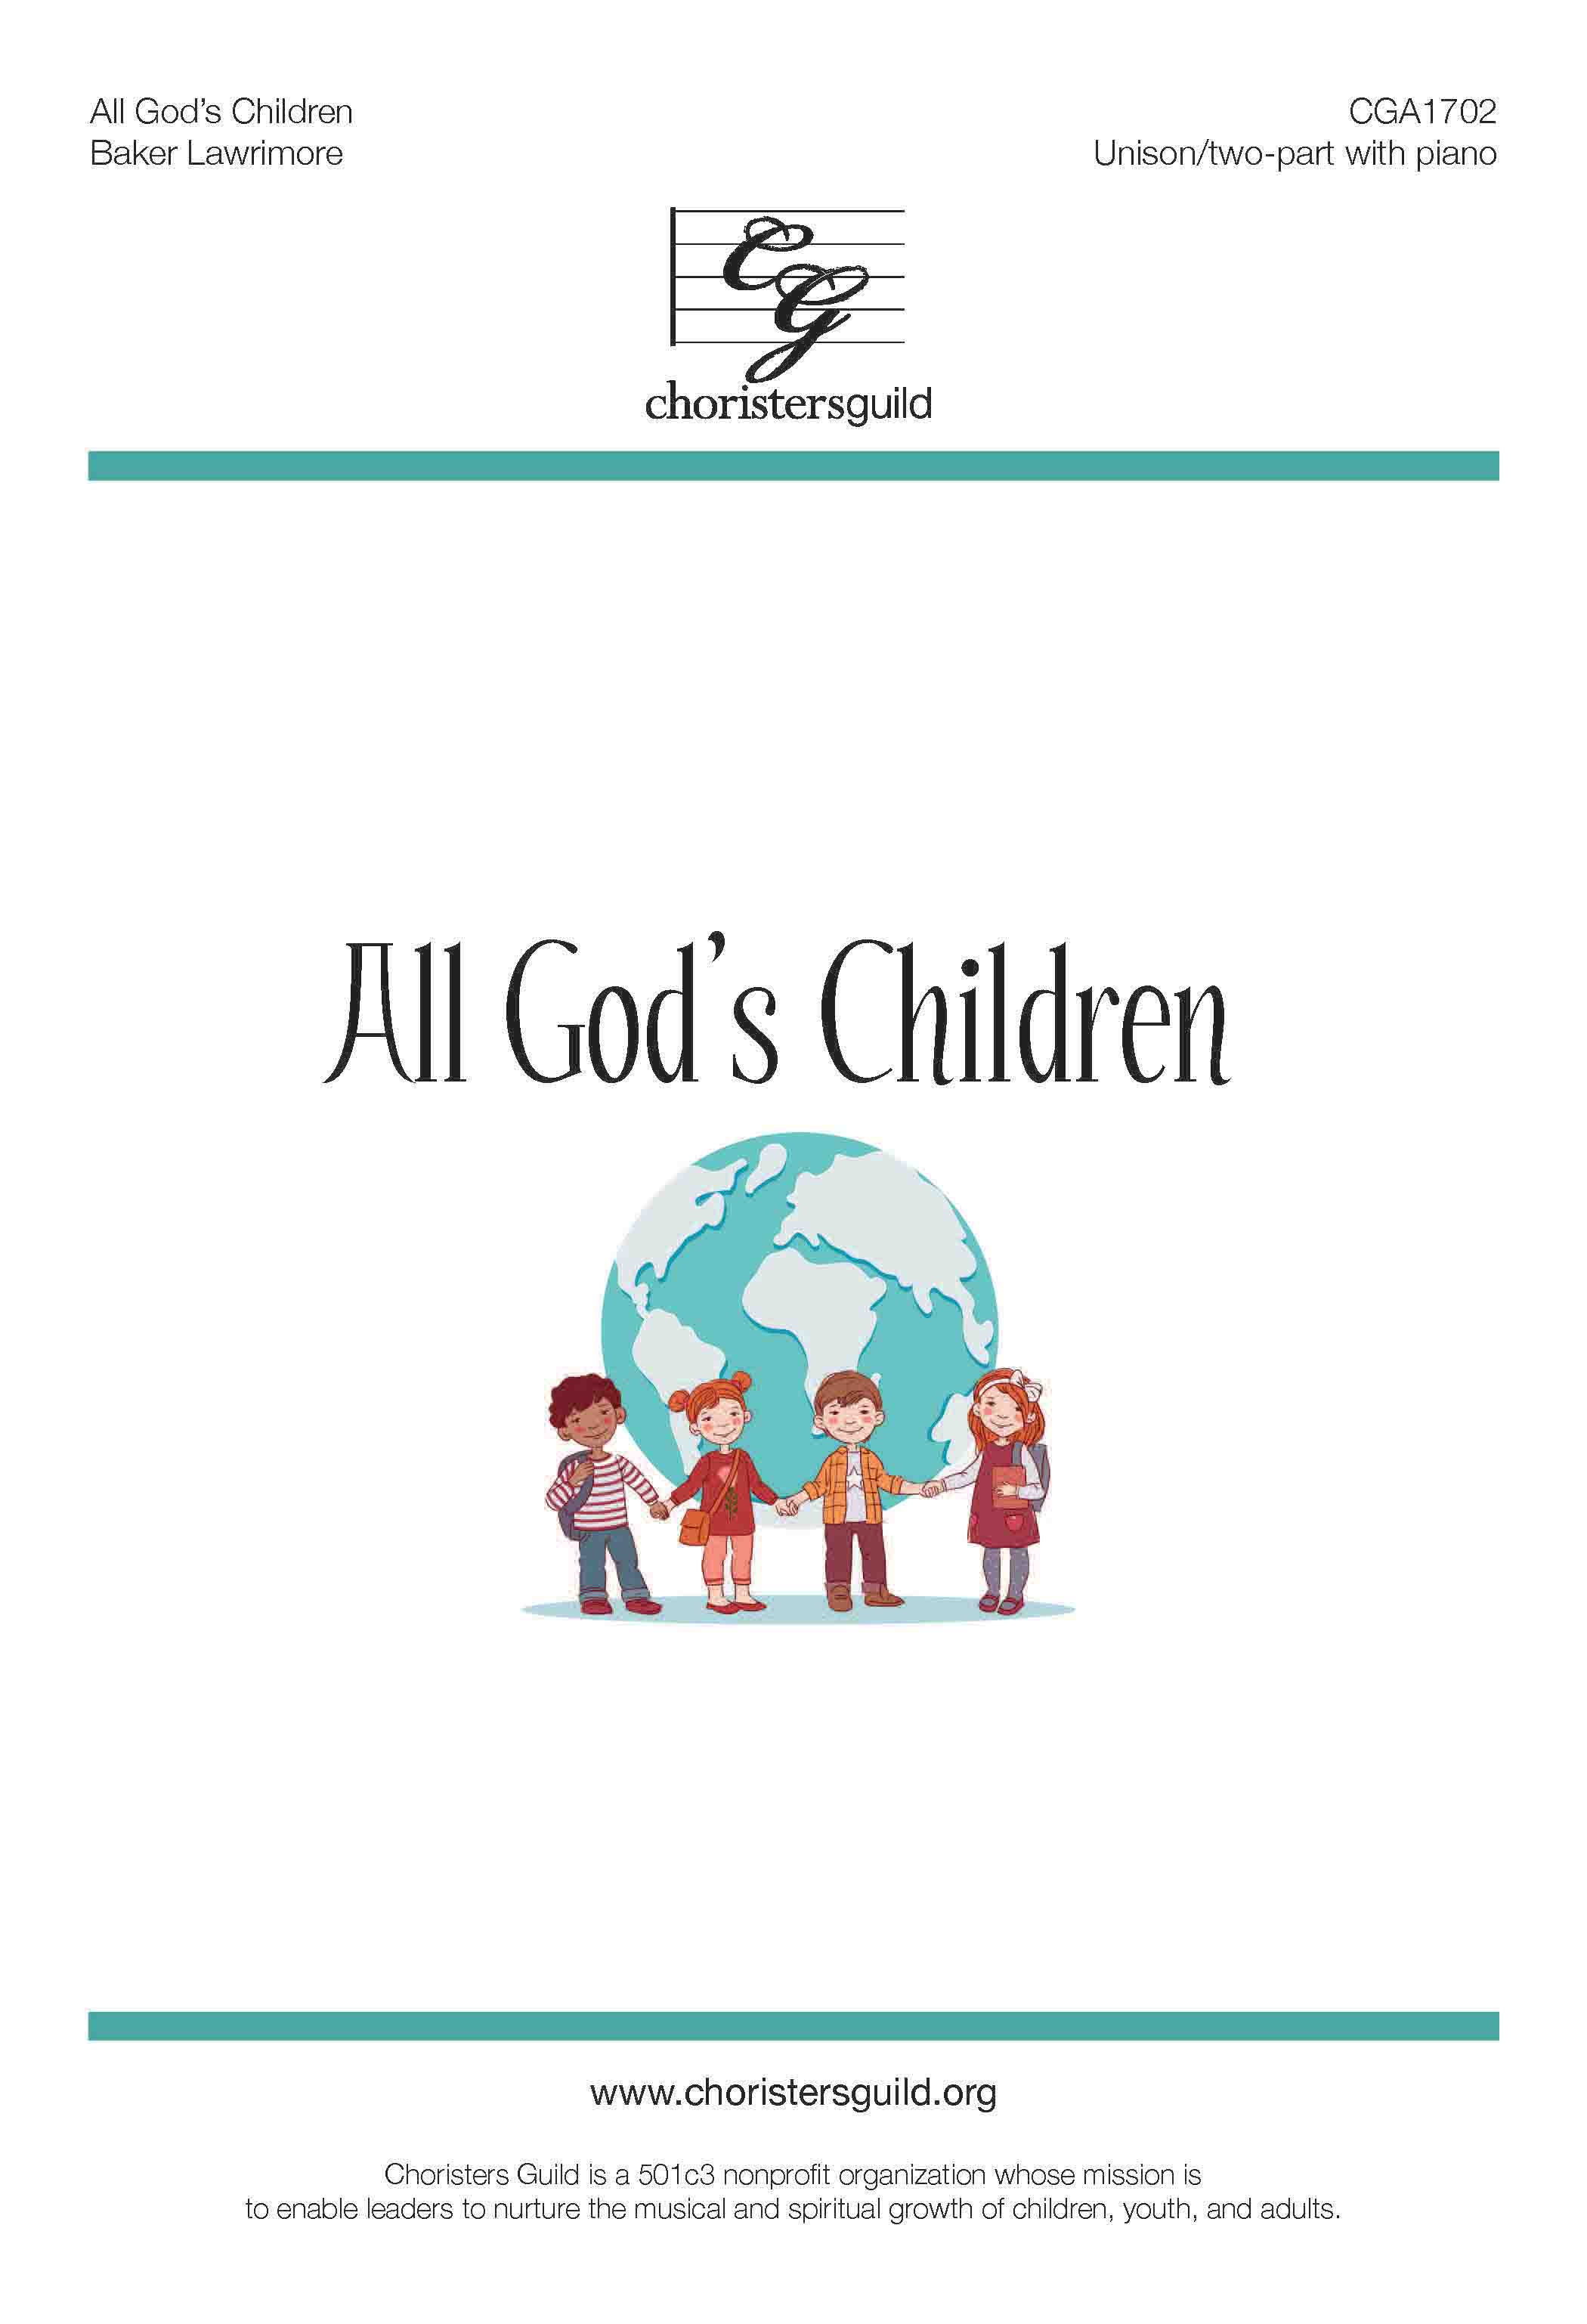 All God's Children - Unison/two-part